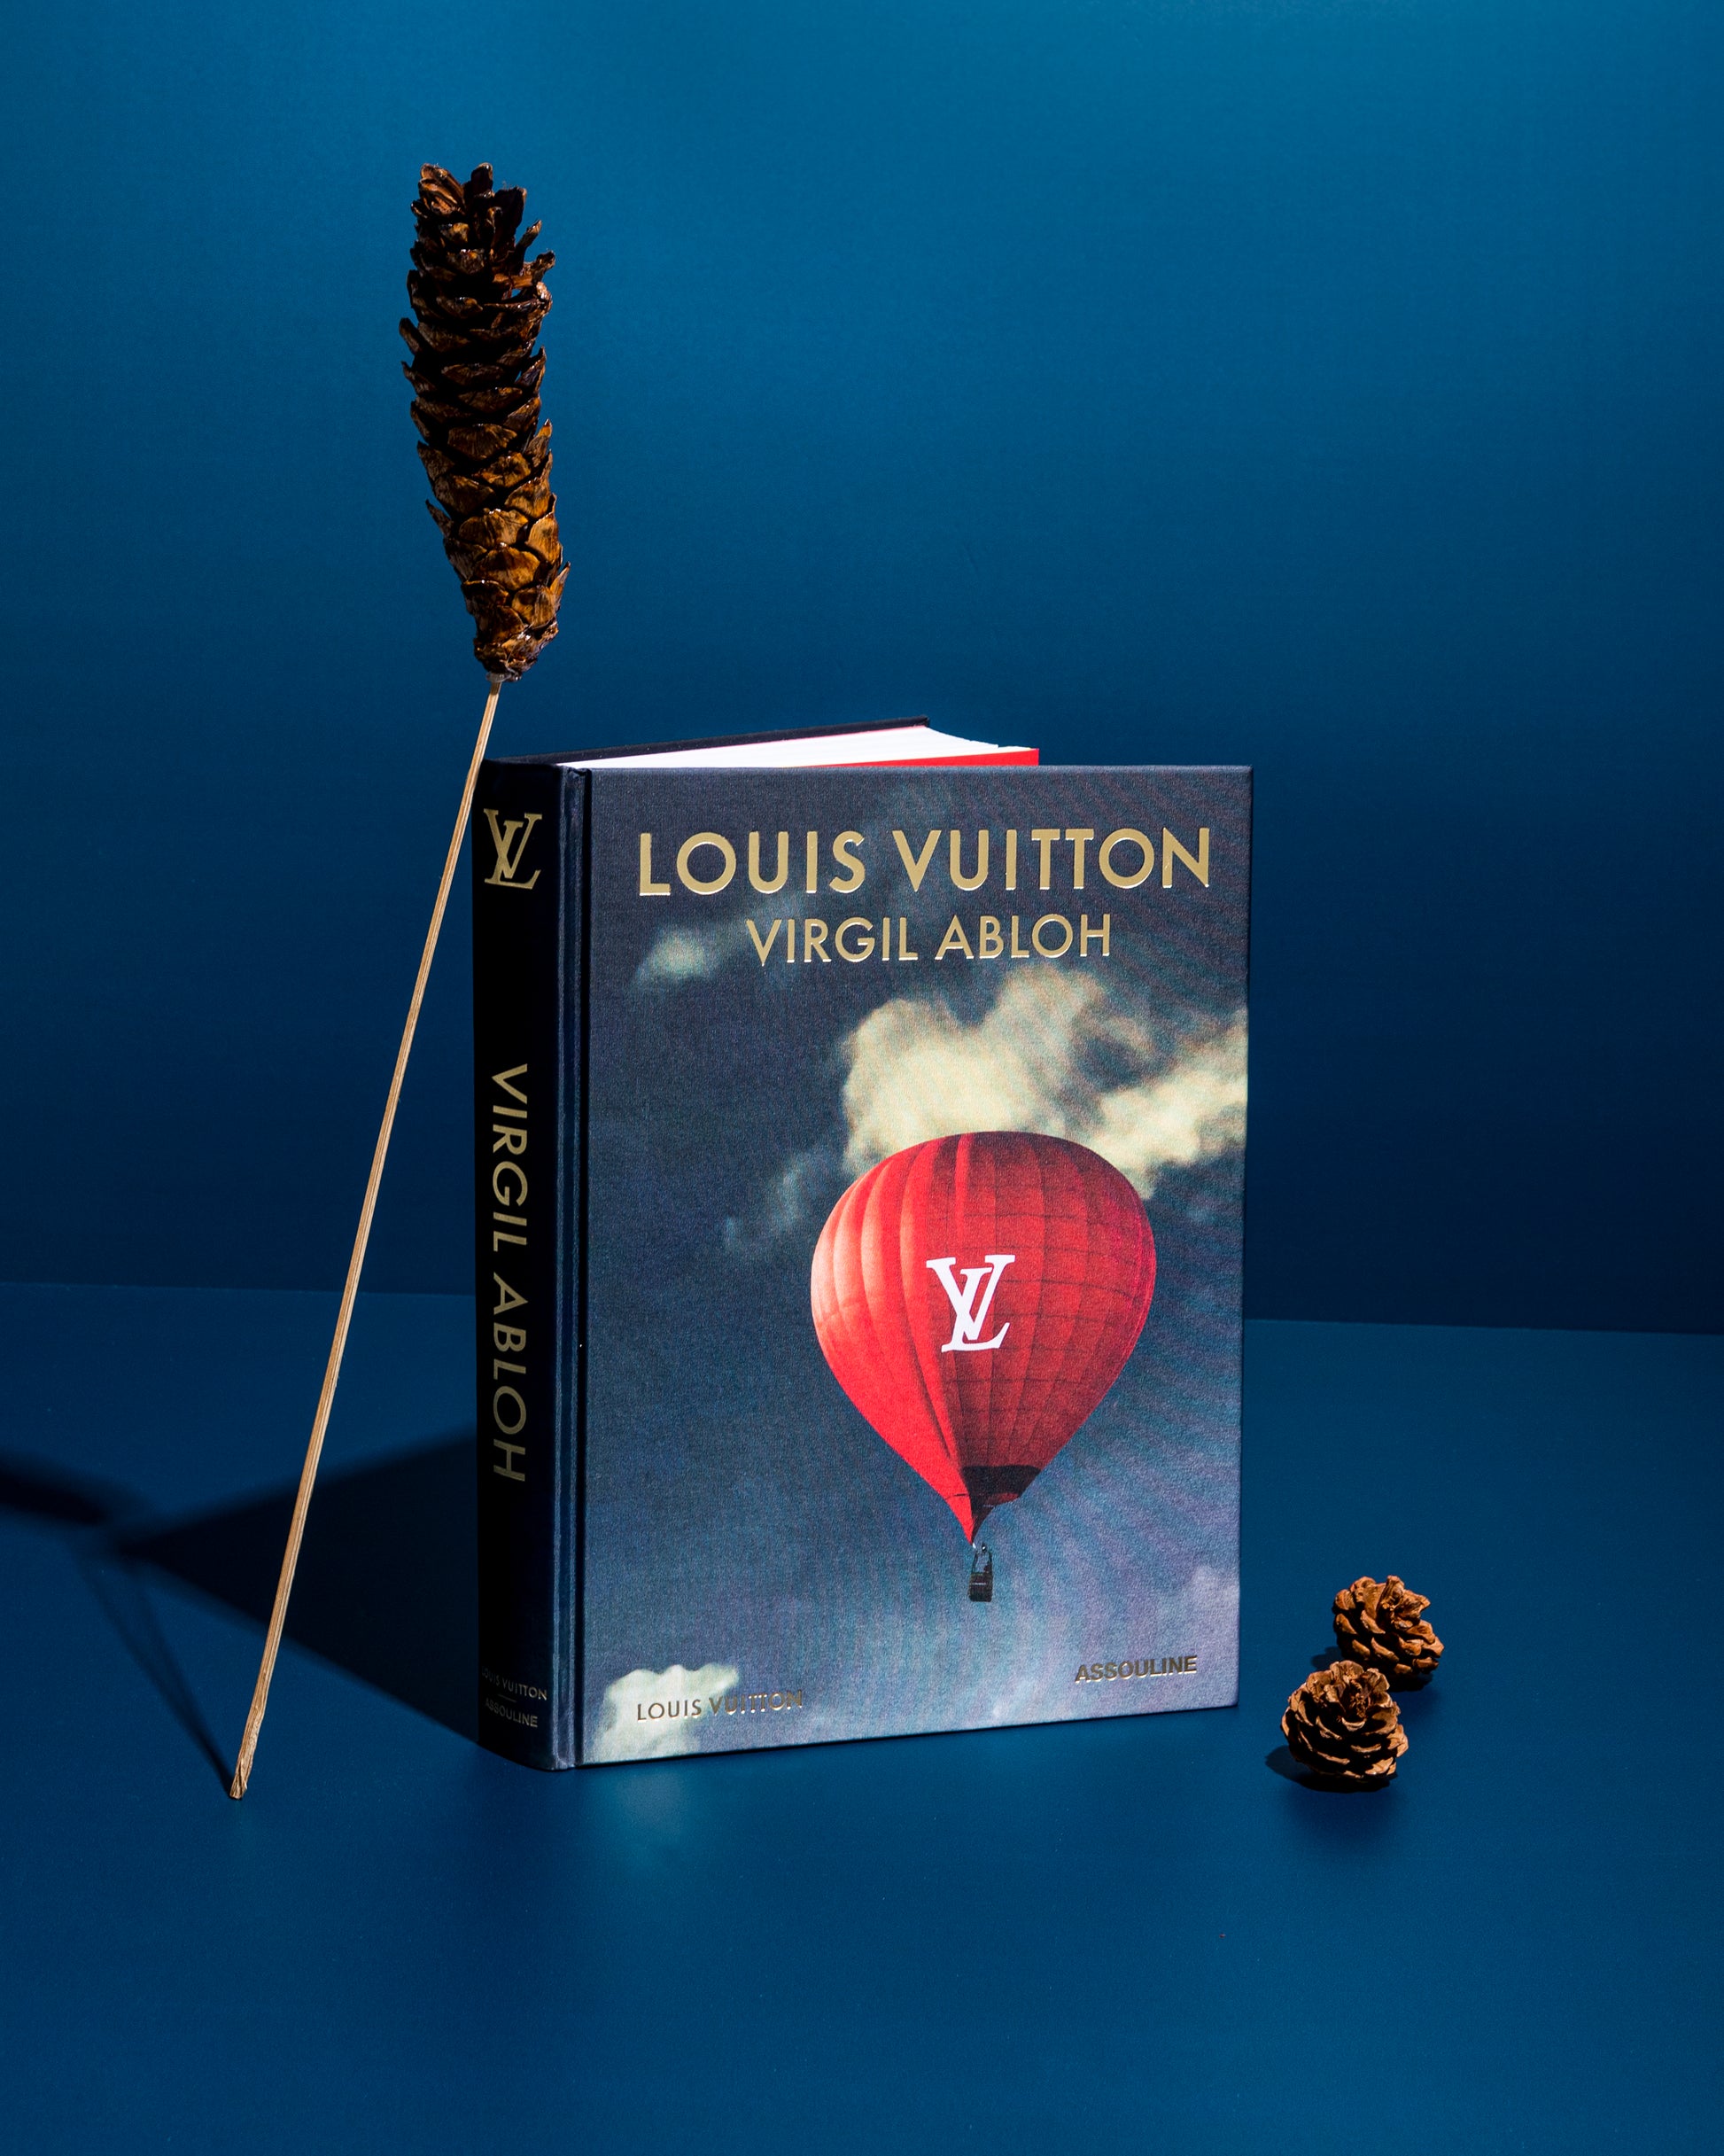 Louis Vuitton Virgil Abloh Balloon Cover